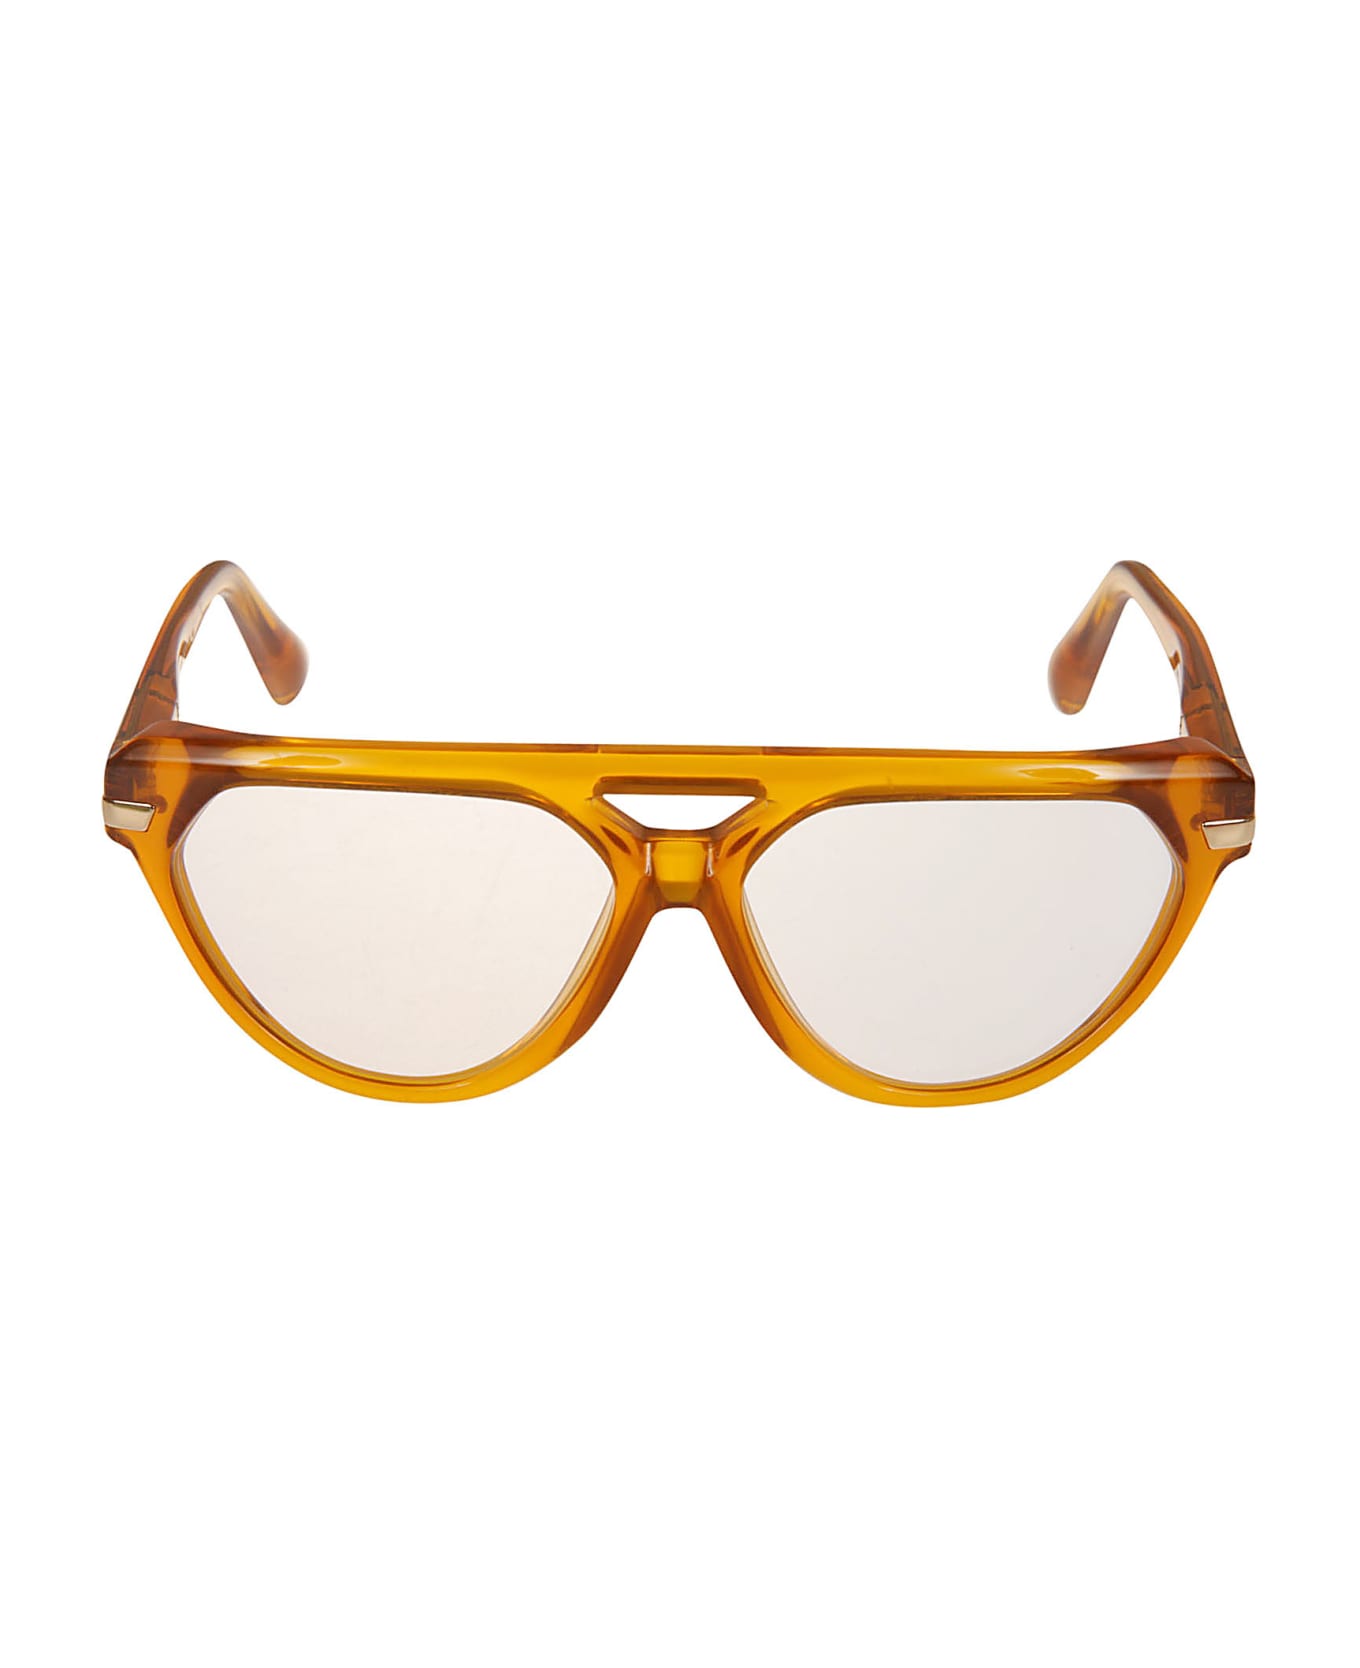 Cazal Cat Eye Transparent Glasses - Orange